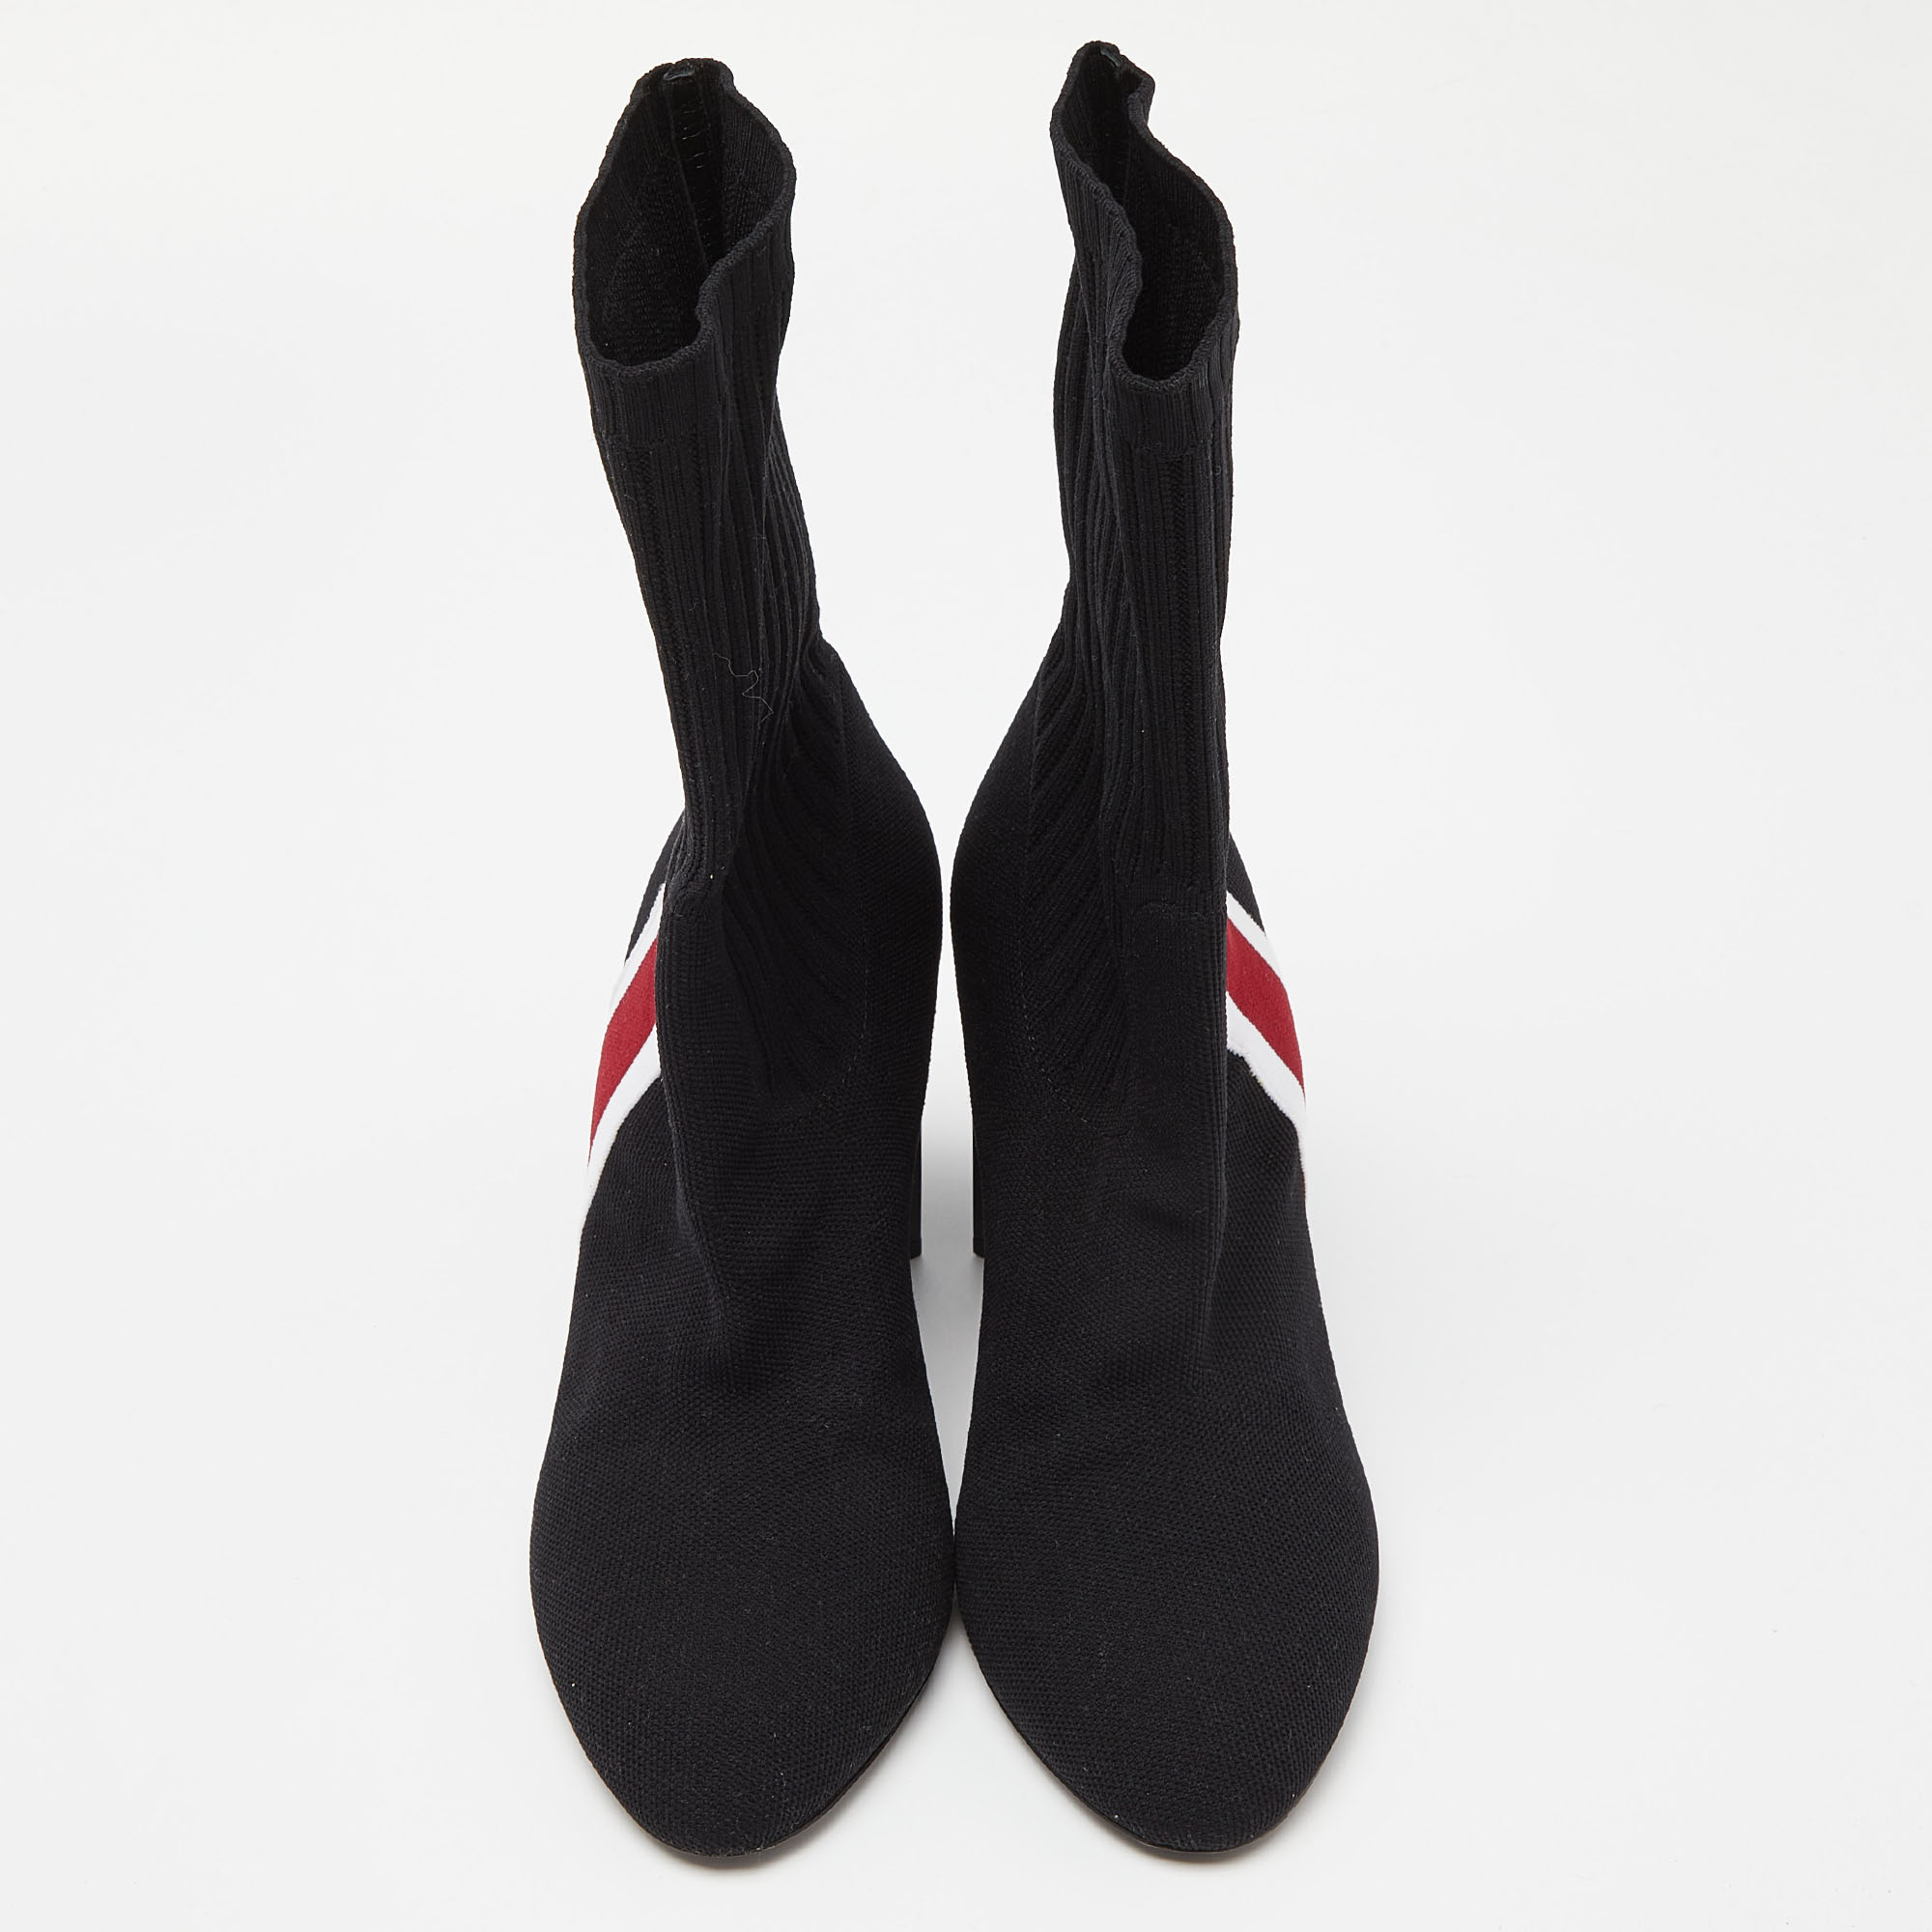 Louis Vuitton Black Knit Fabric LV Sock Ankle Boots Size 39